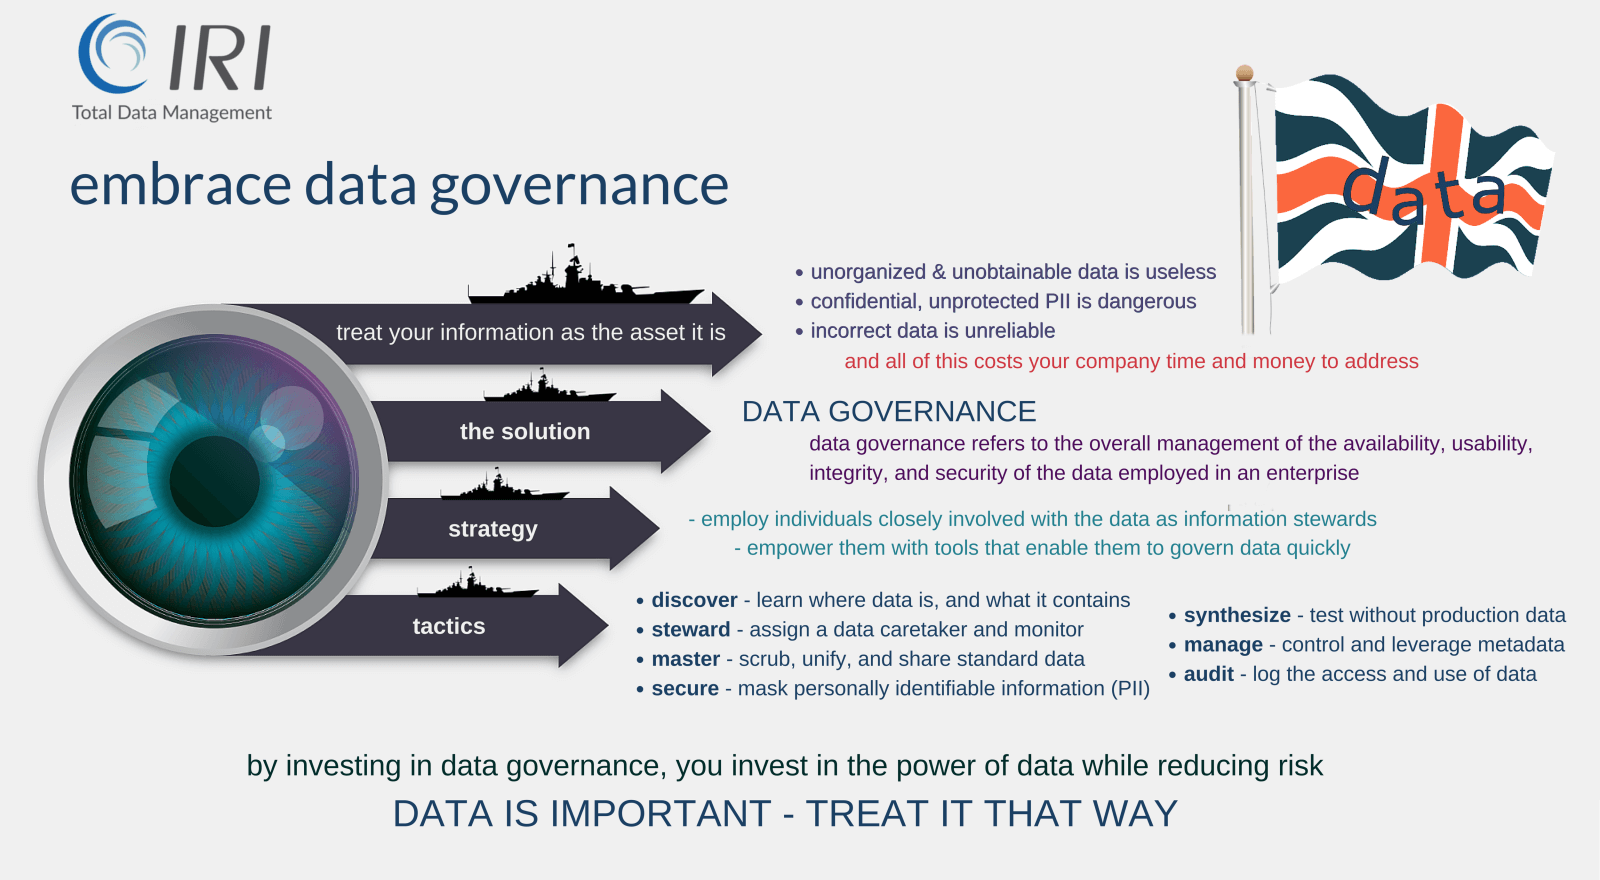 data governance description and benefits